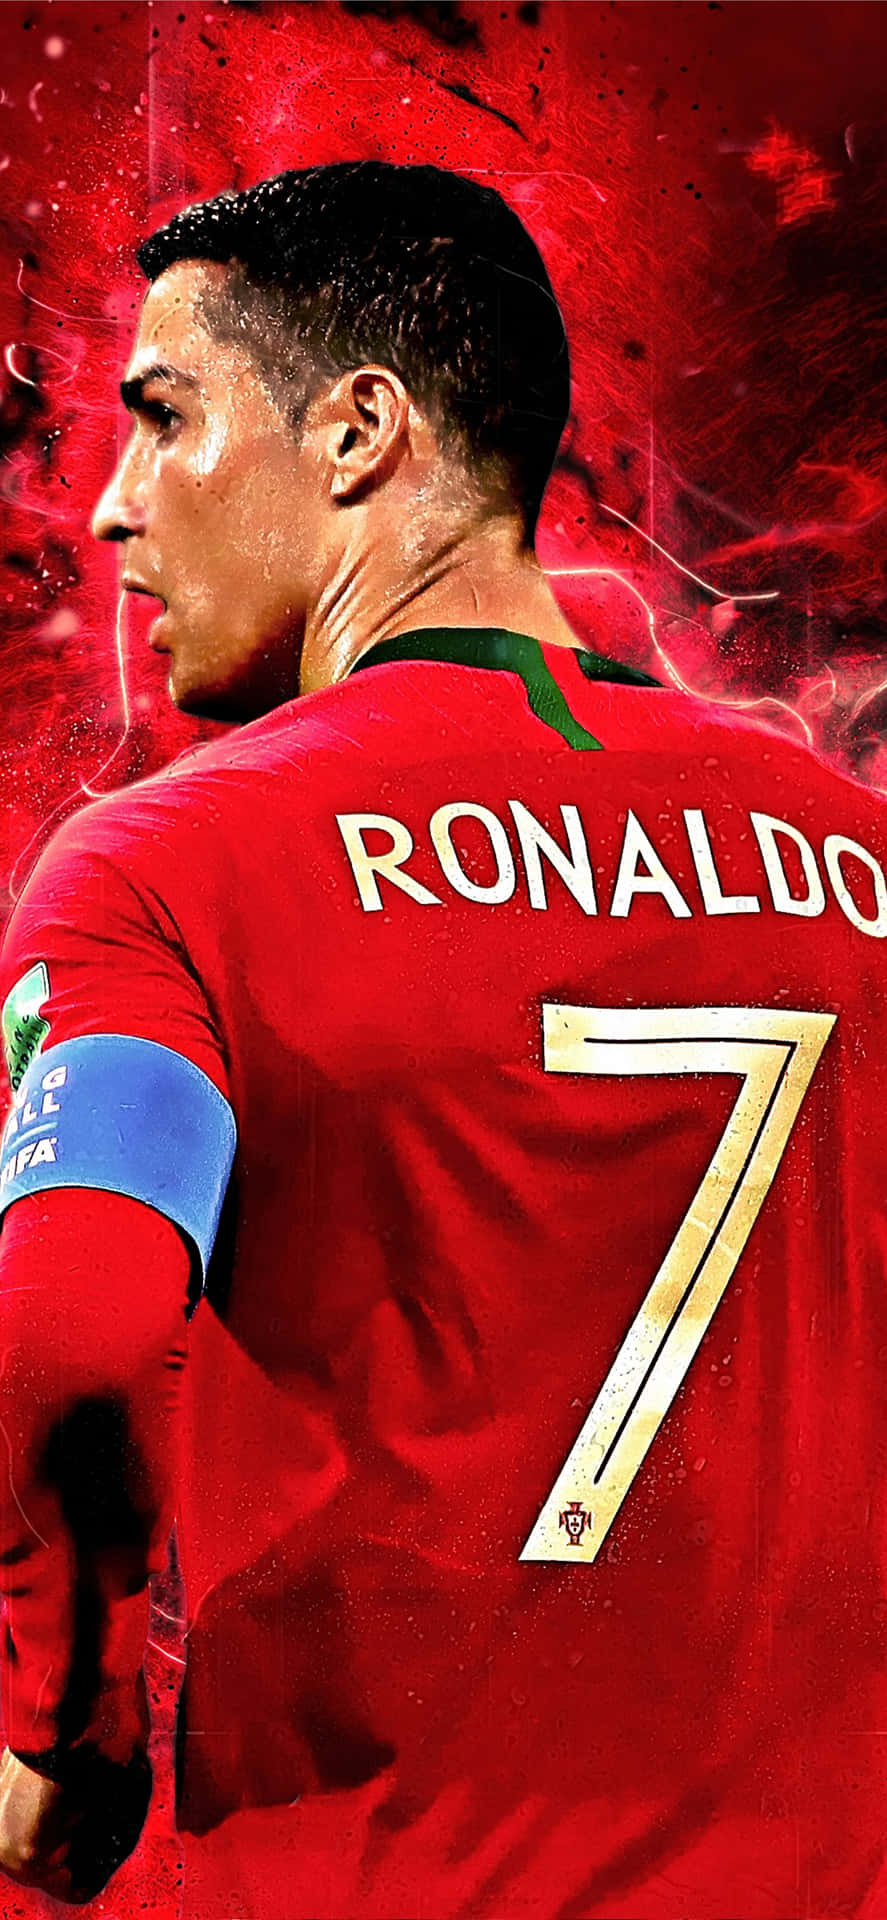 Cristiano Ronaldo Wallpapers - Top Best 65 Cristiano Ronaldo Backgrounds | Cristiano  ronaldo wallpapers, Ronaldo wallpapers, Cristiano ronaldo